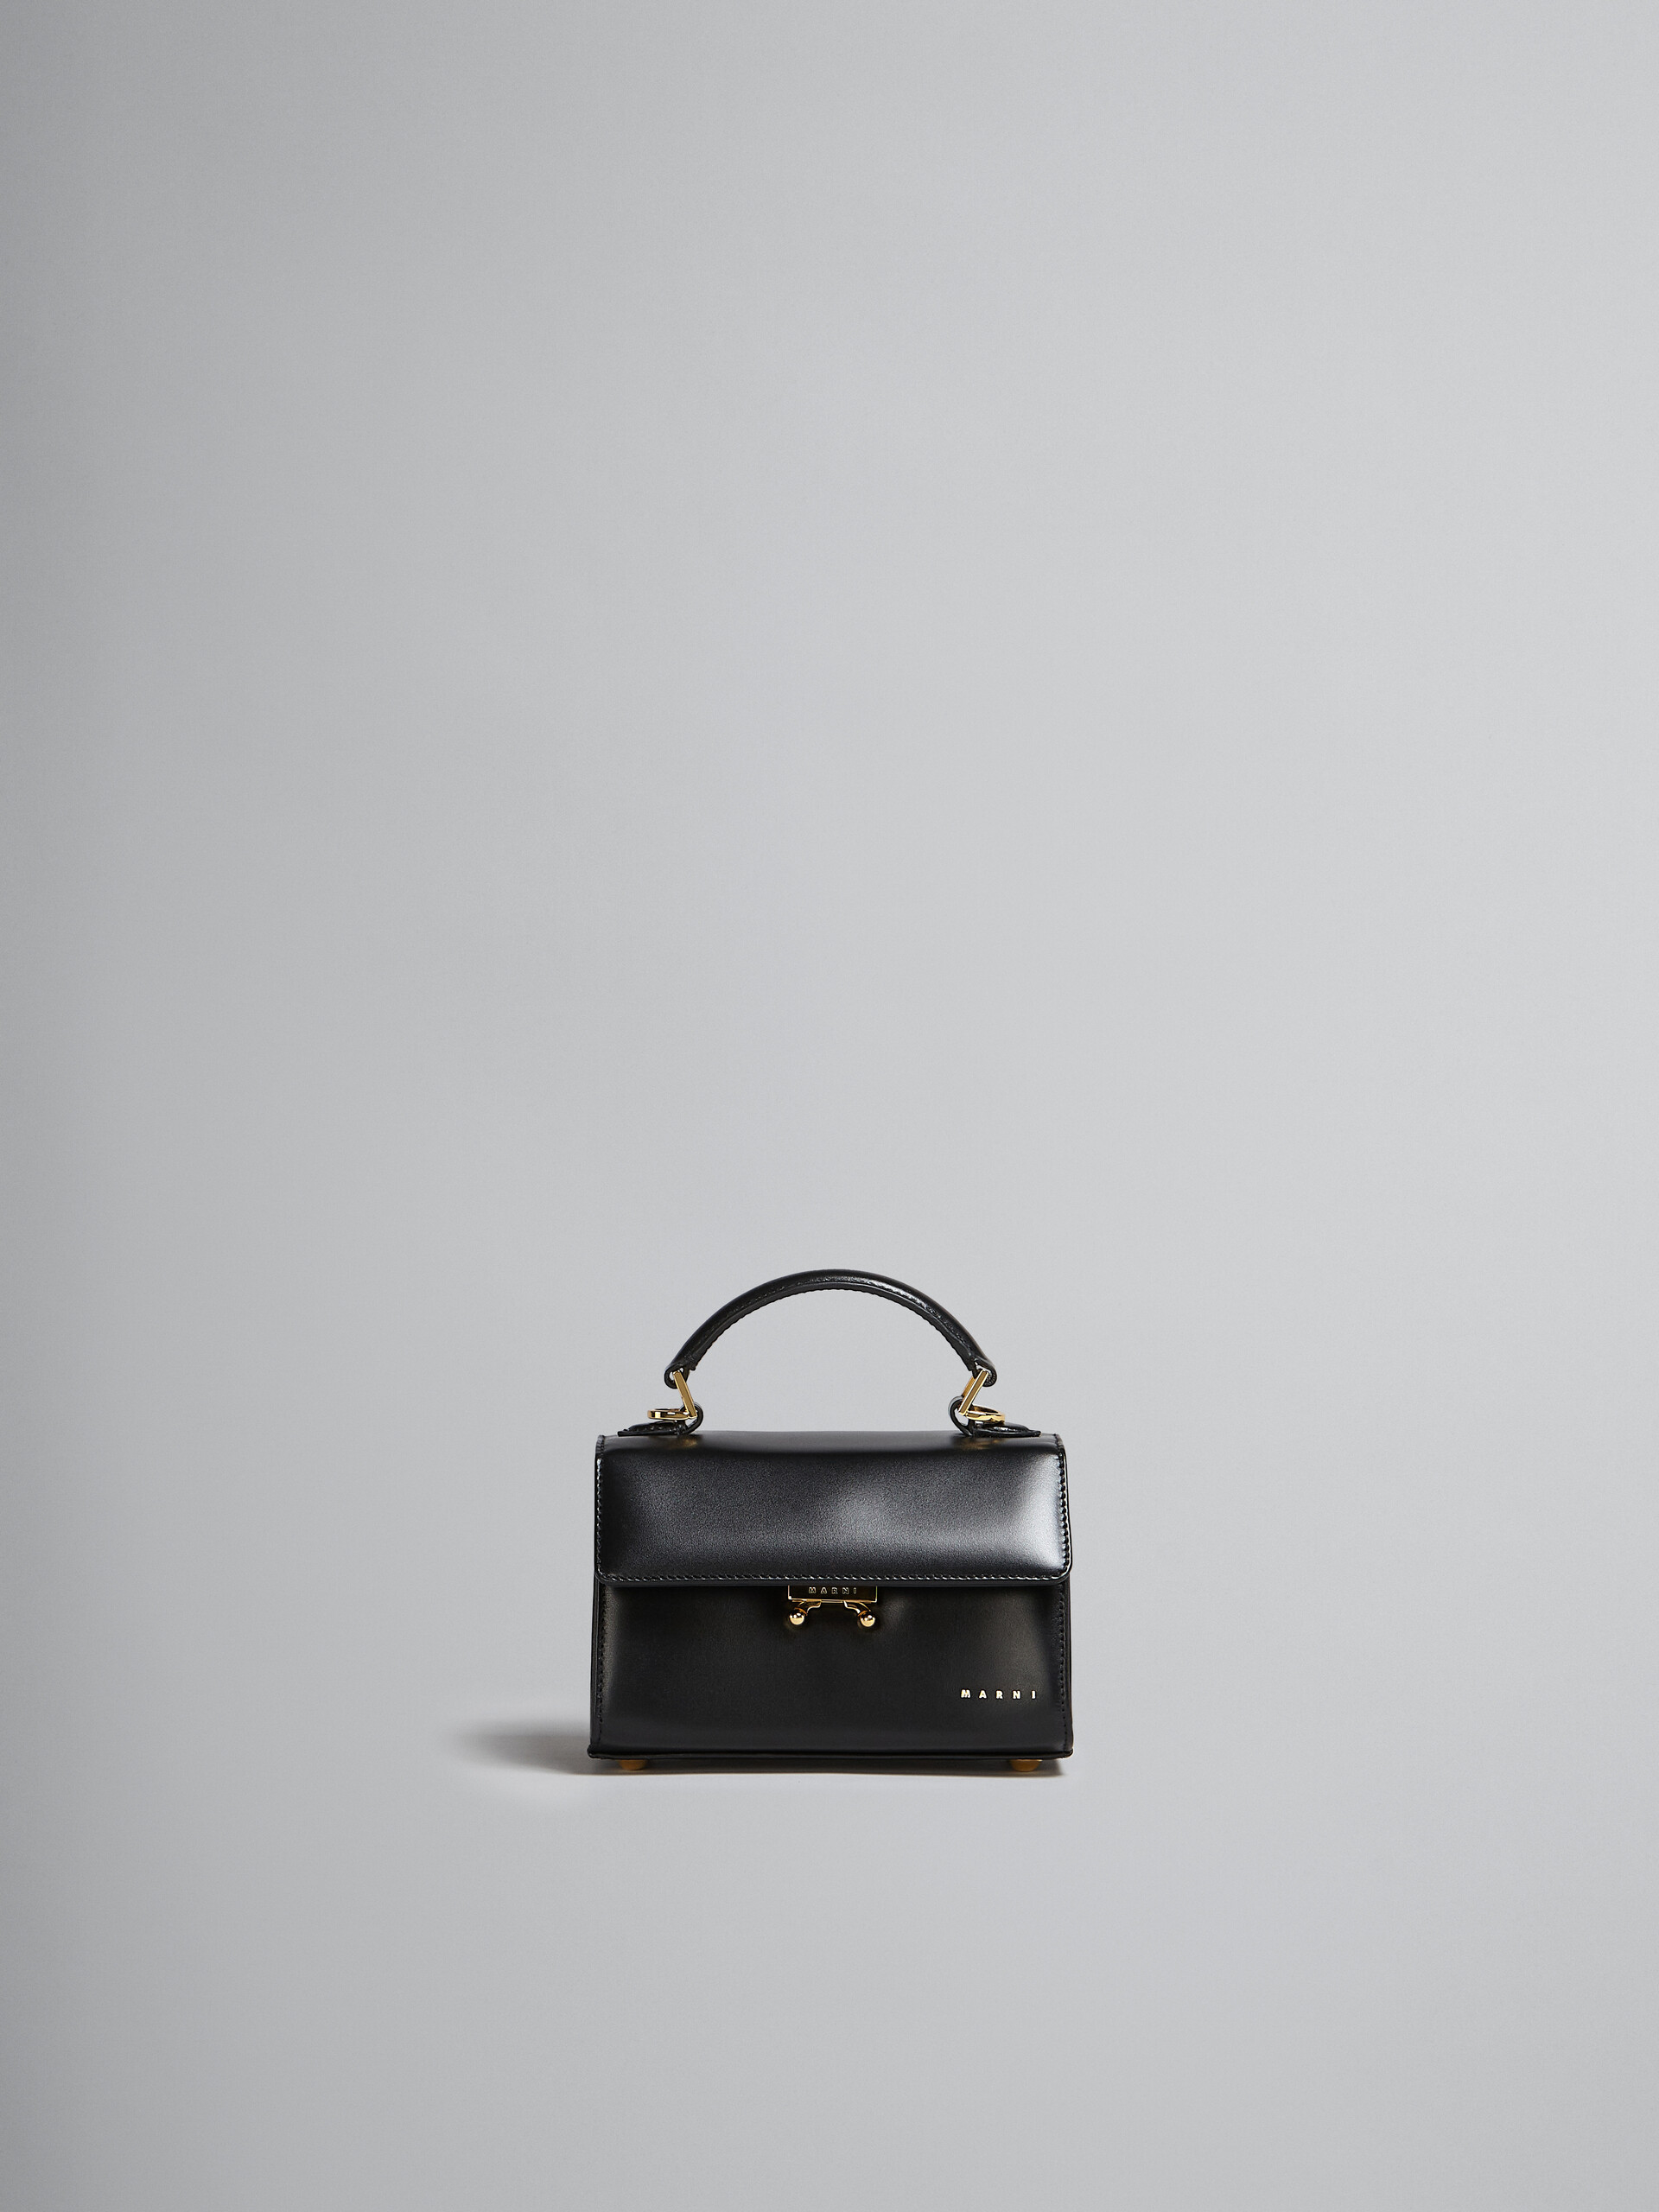 Relativity Mini Bag in black leather - Handbags - Image 1